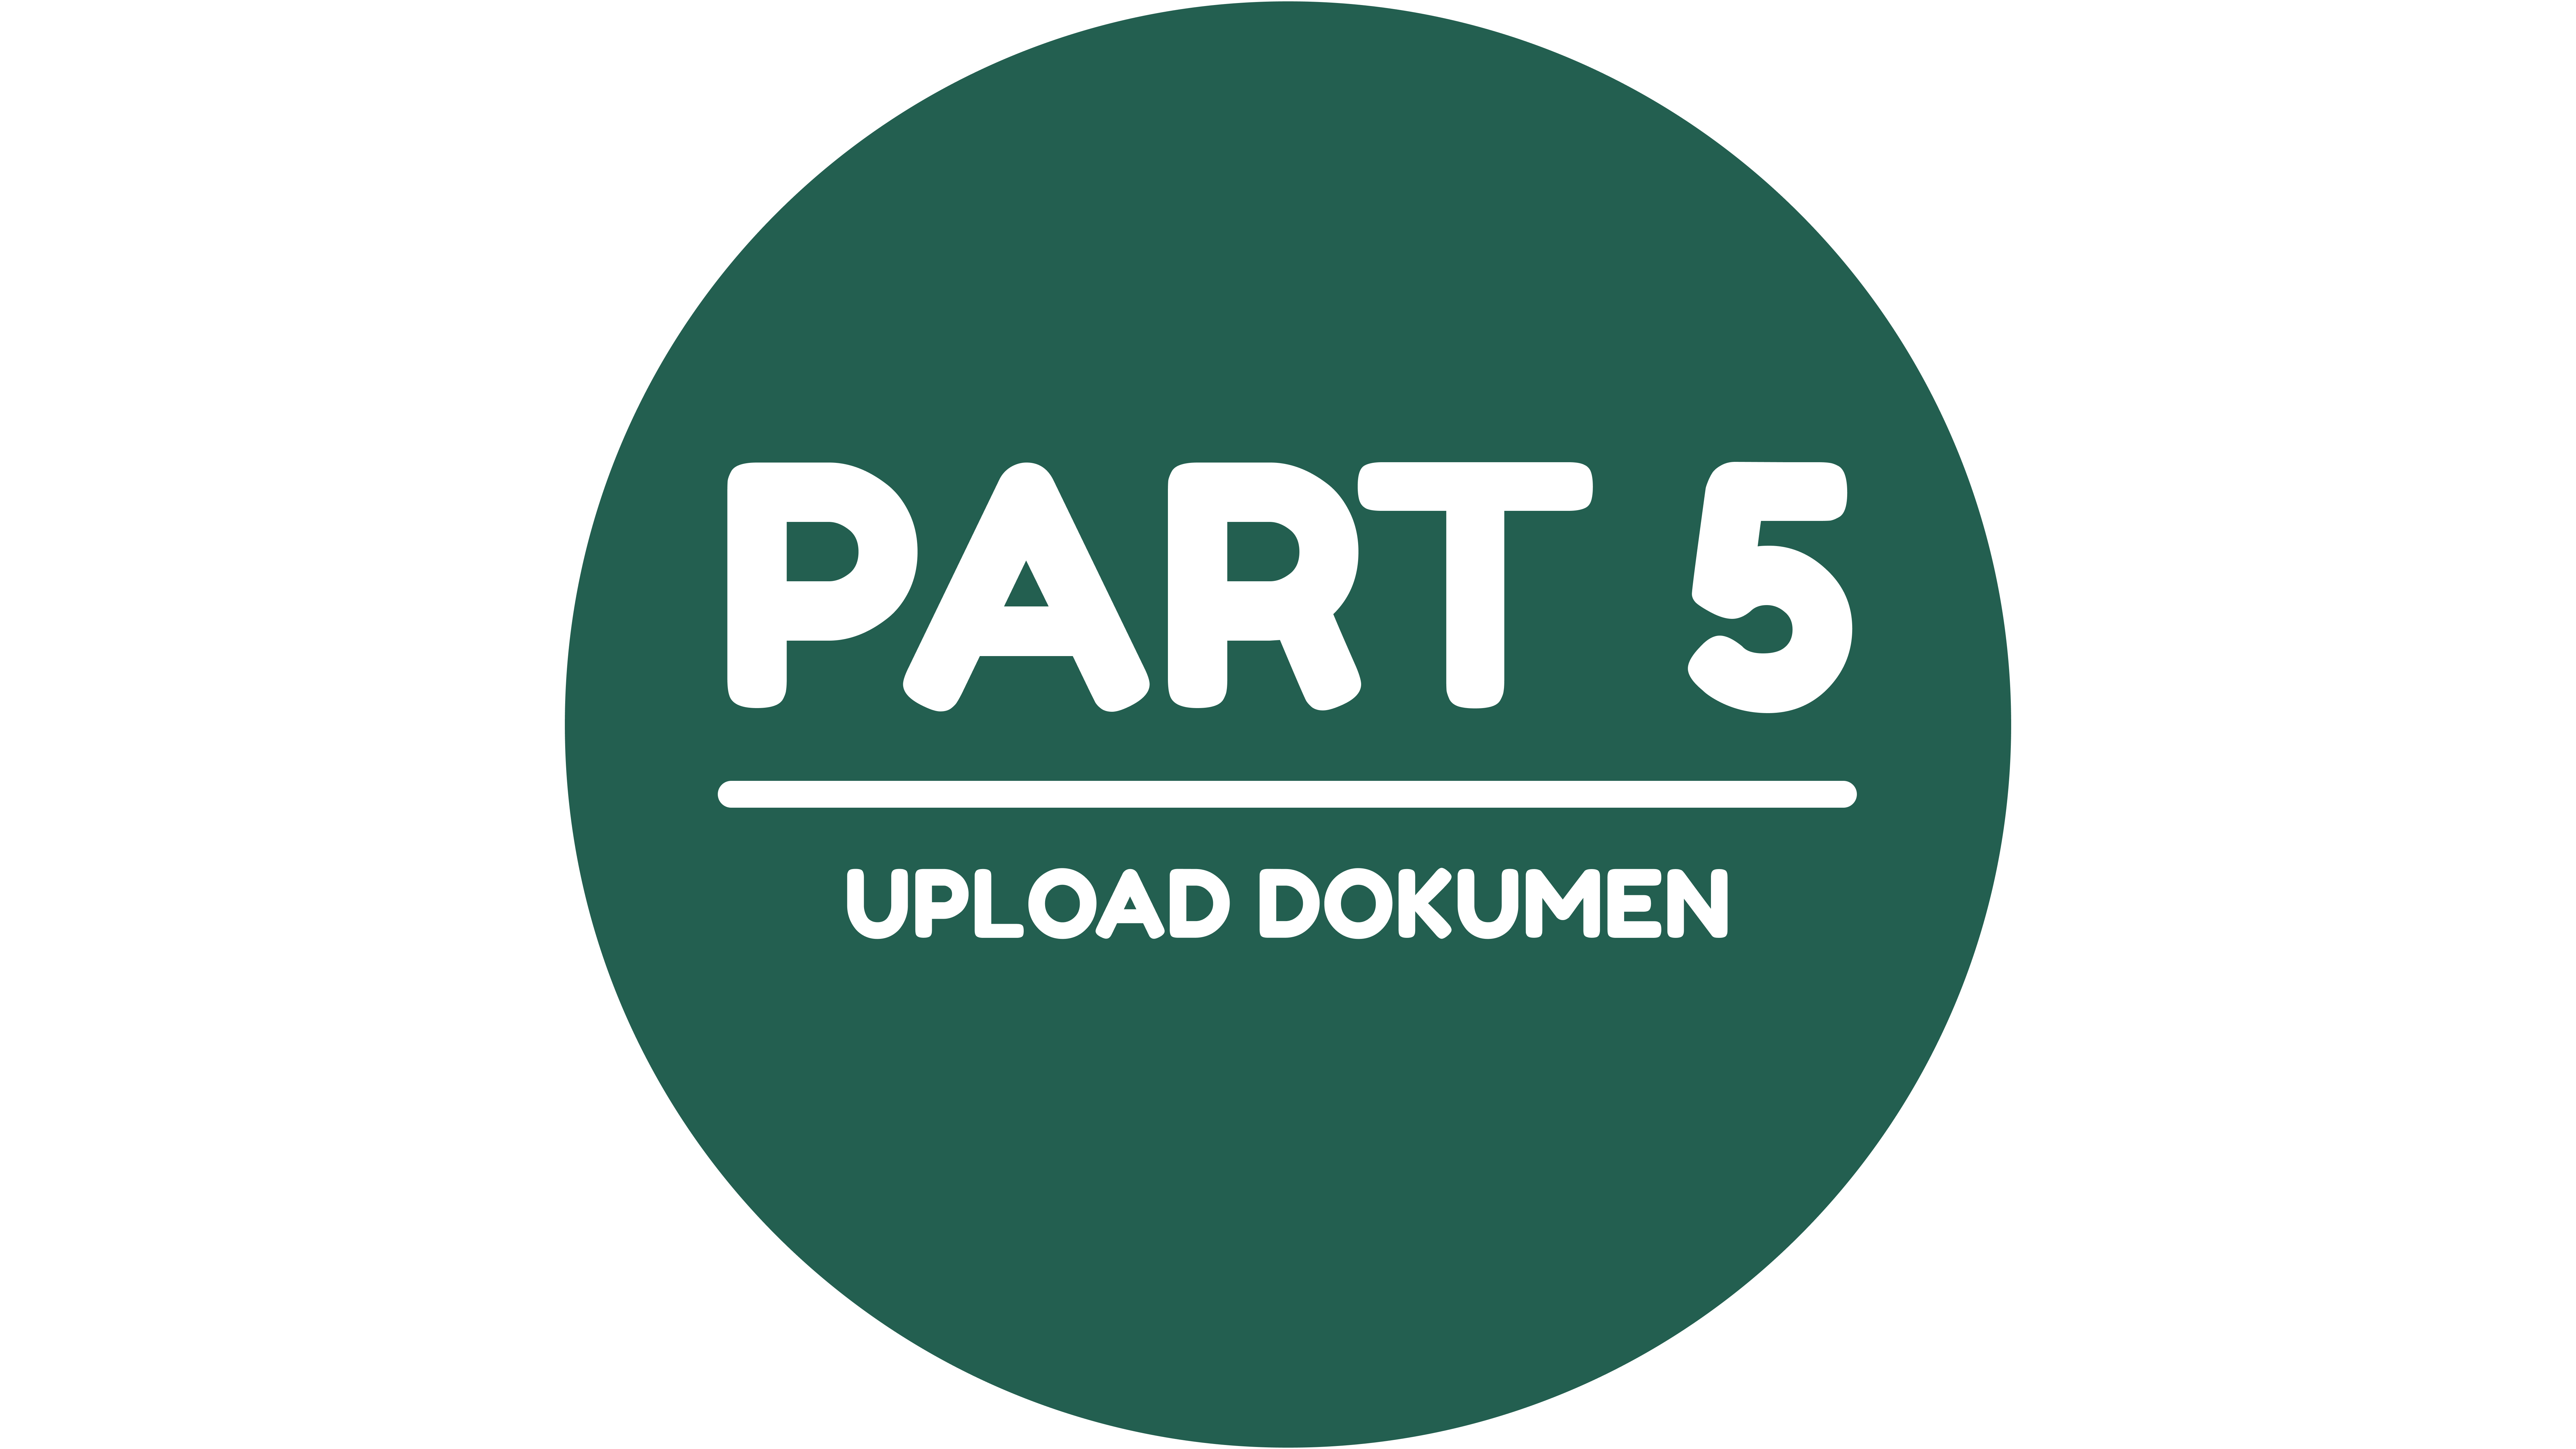 #5 Upload Dokumen